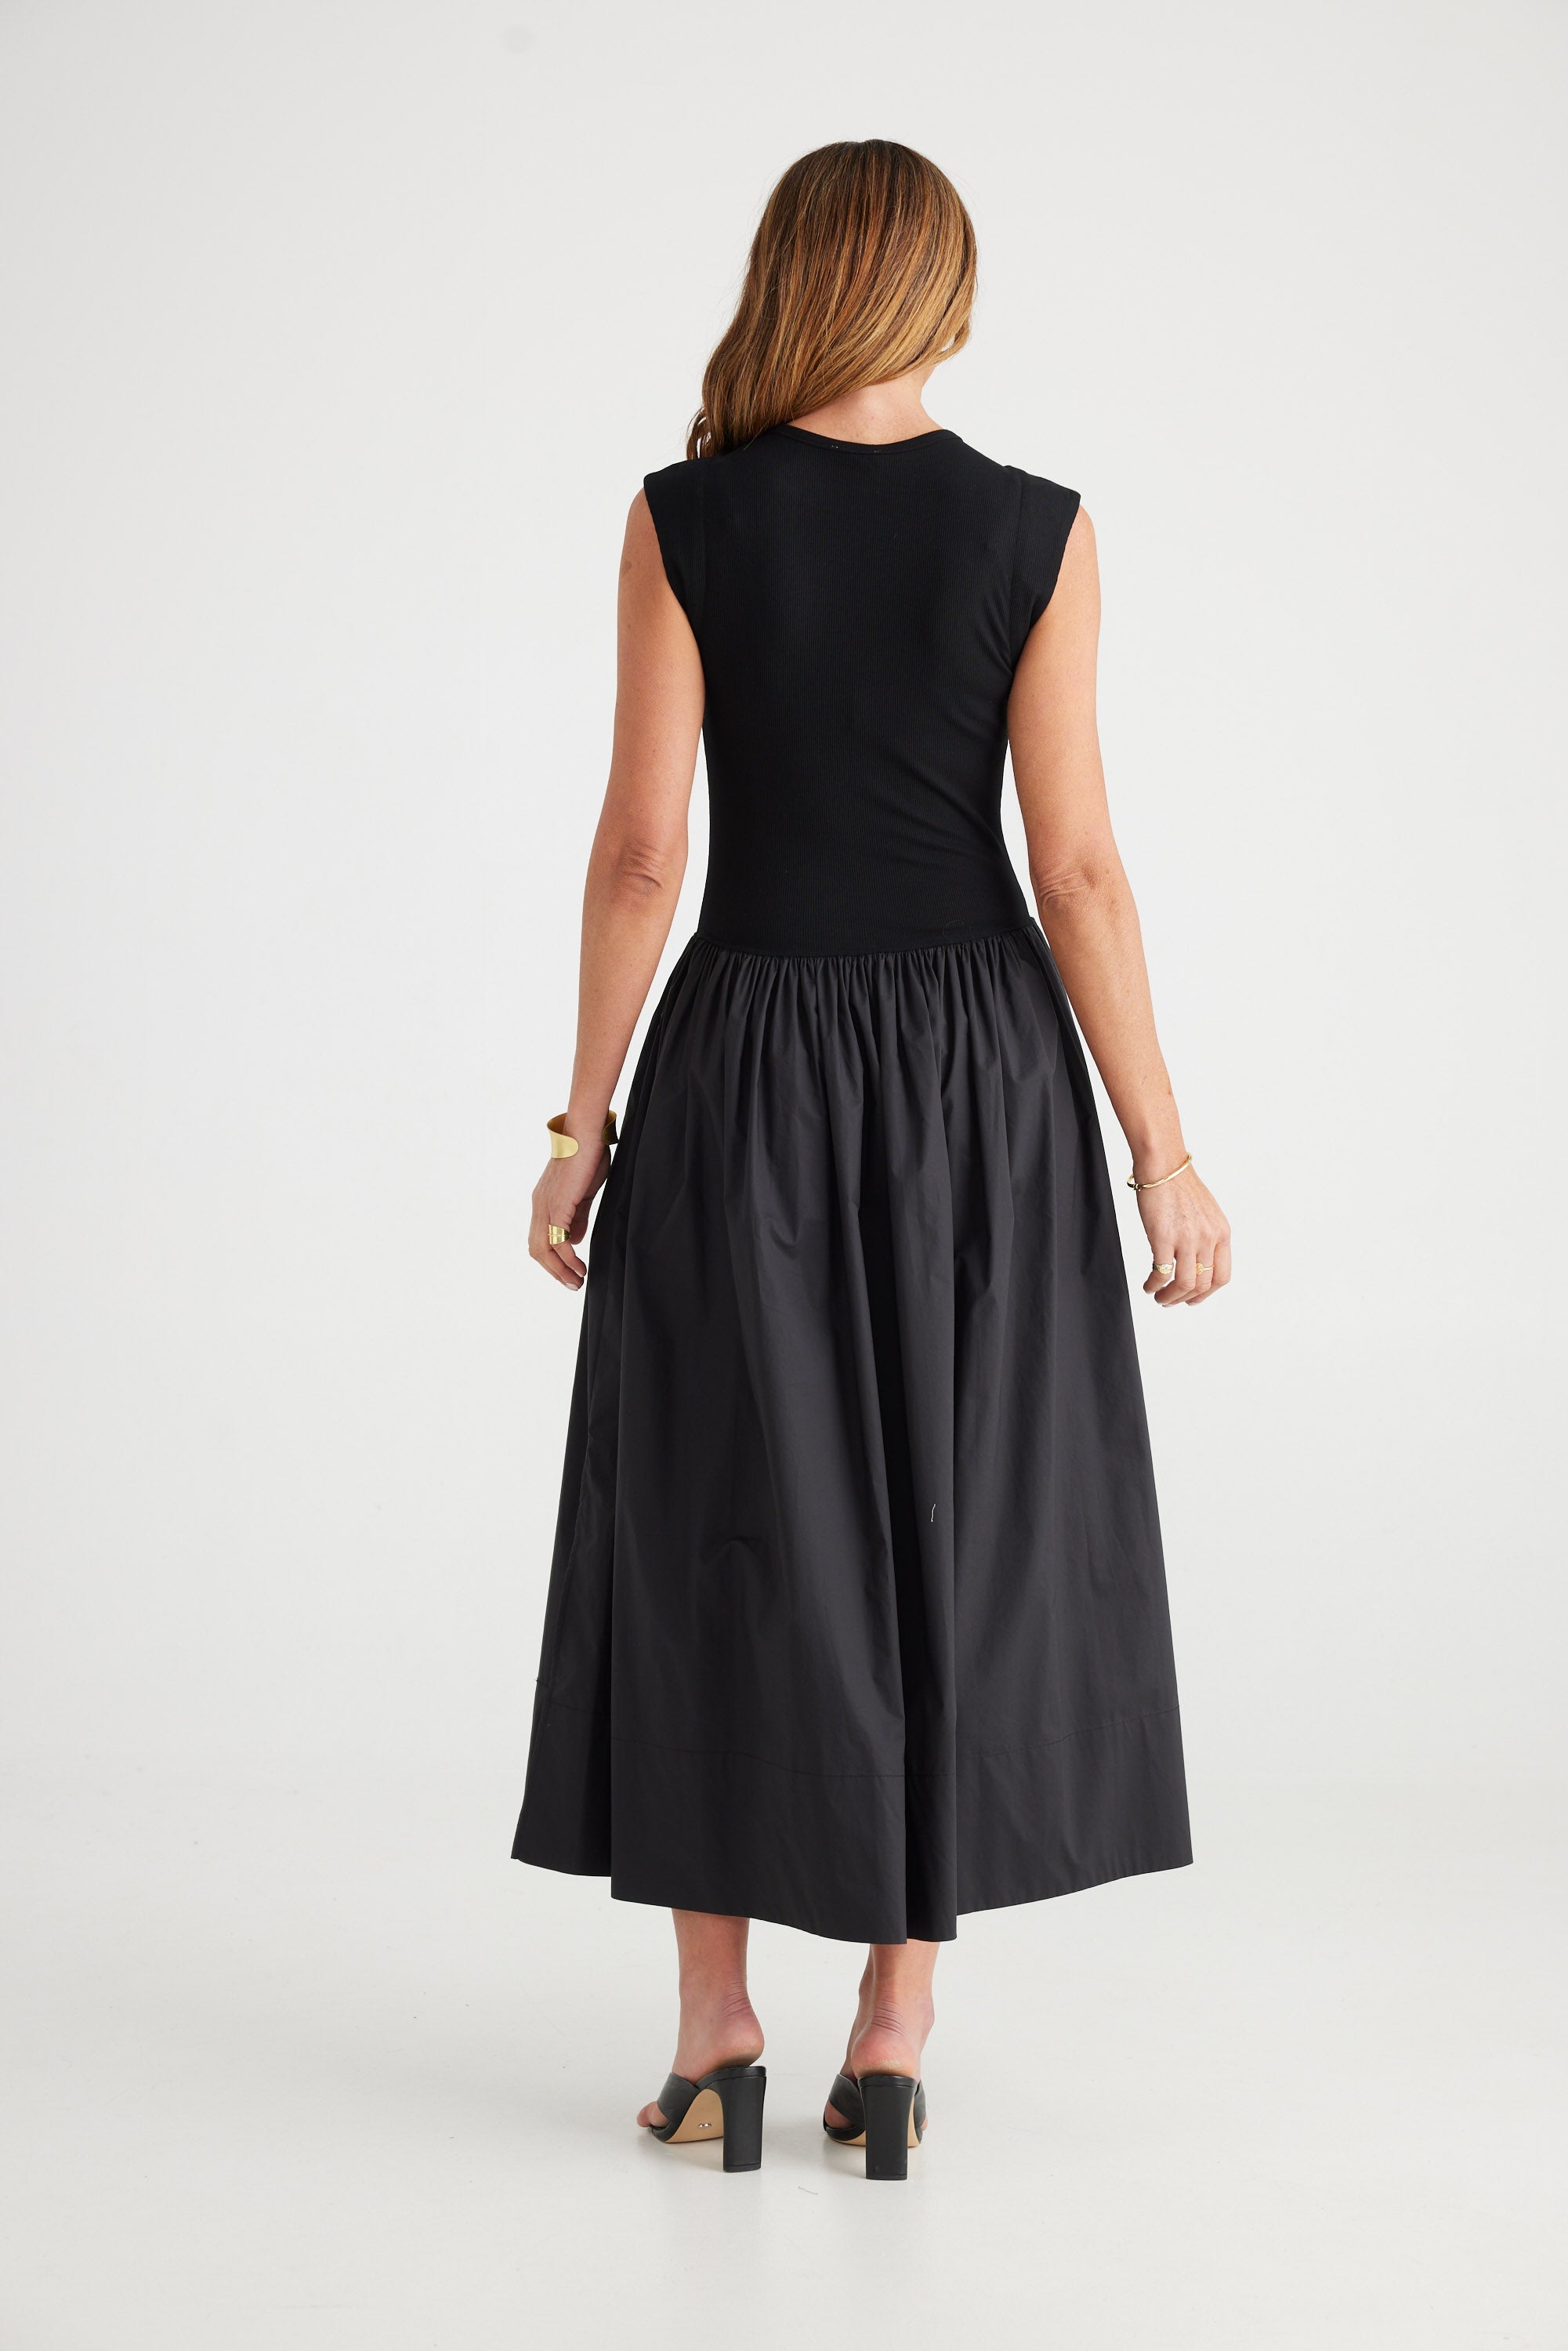 Brave + True - Daphne Dress | Black